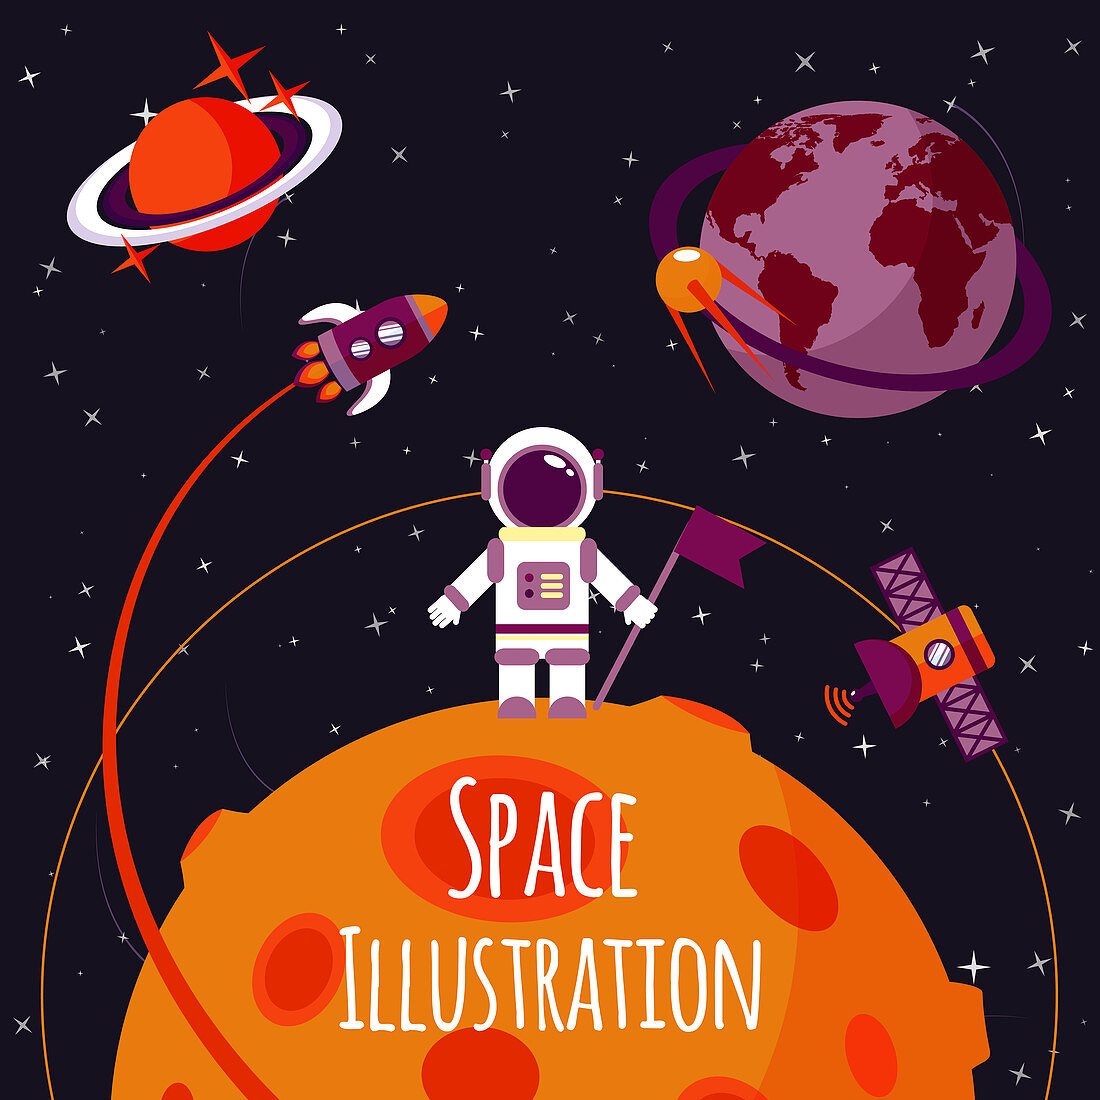 Space, illustration